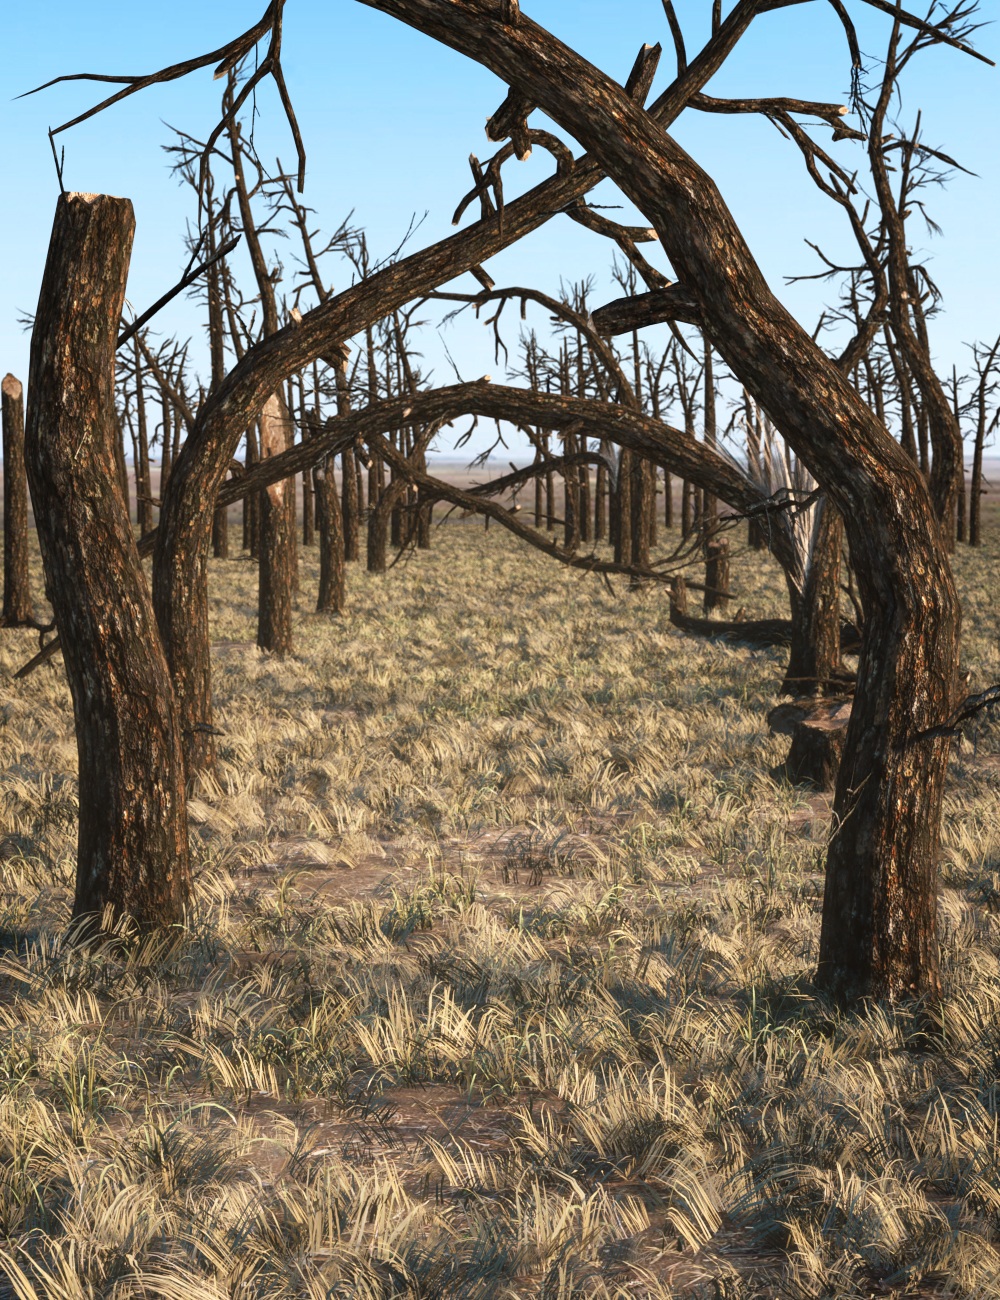 Nature - Broken Trees Pack 1 by: Andrey Pestryakov, 3D Models by Daz 3D